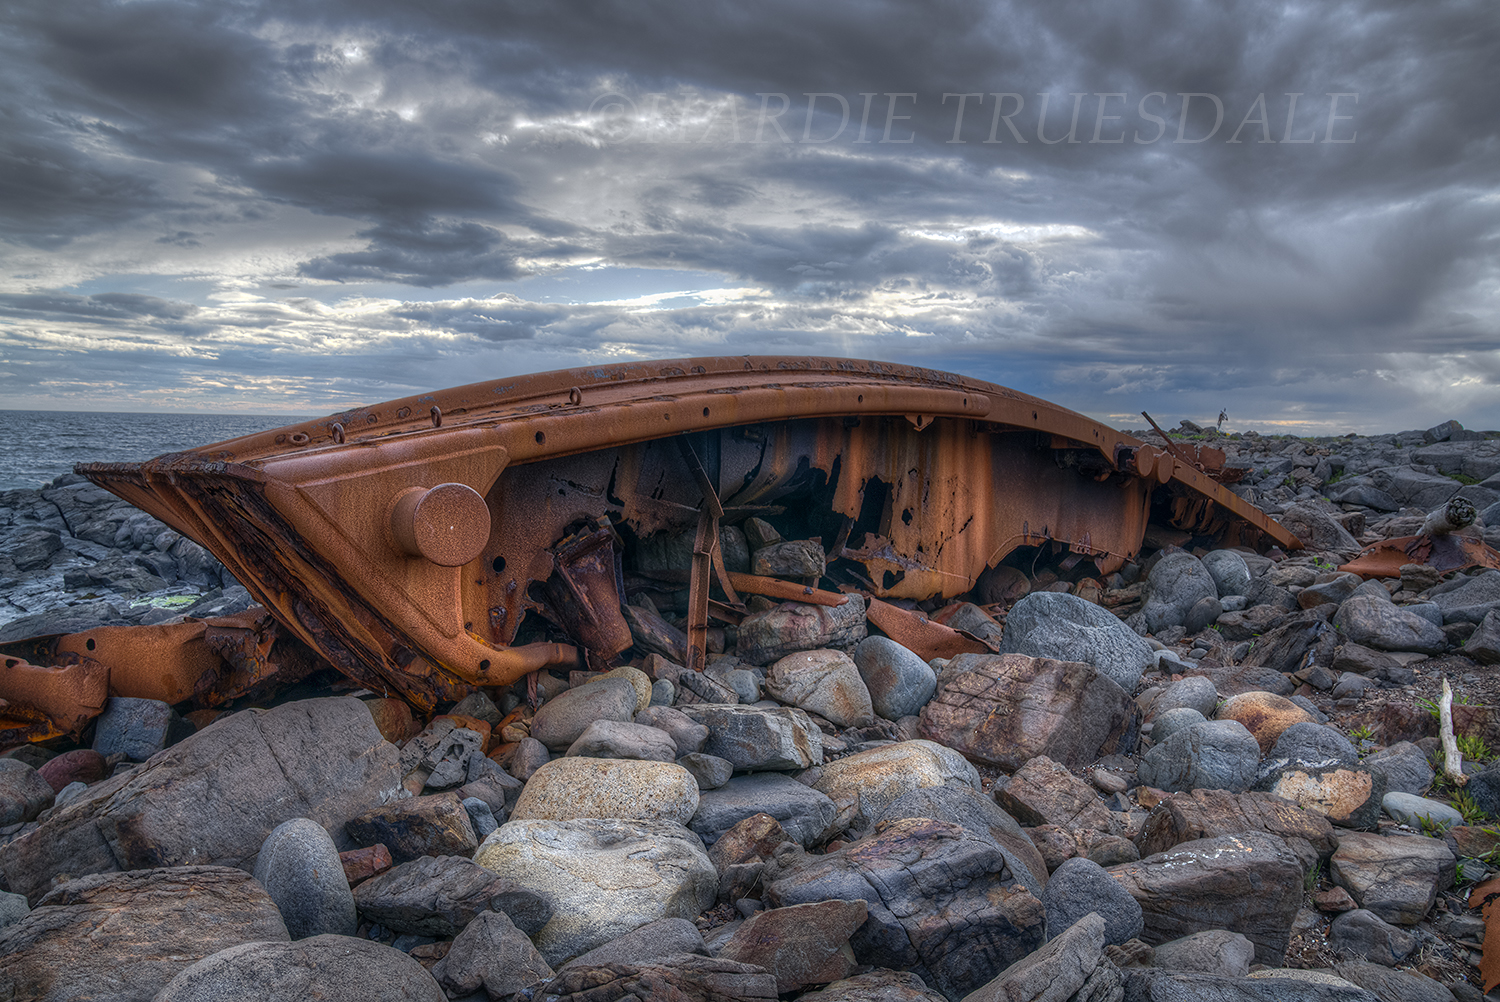 ME#69 "Shipwreck, Monhegan Island"